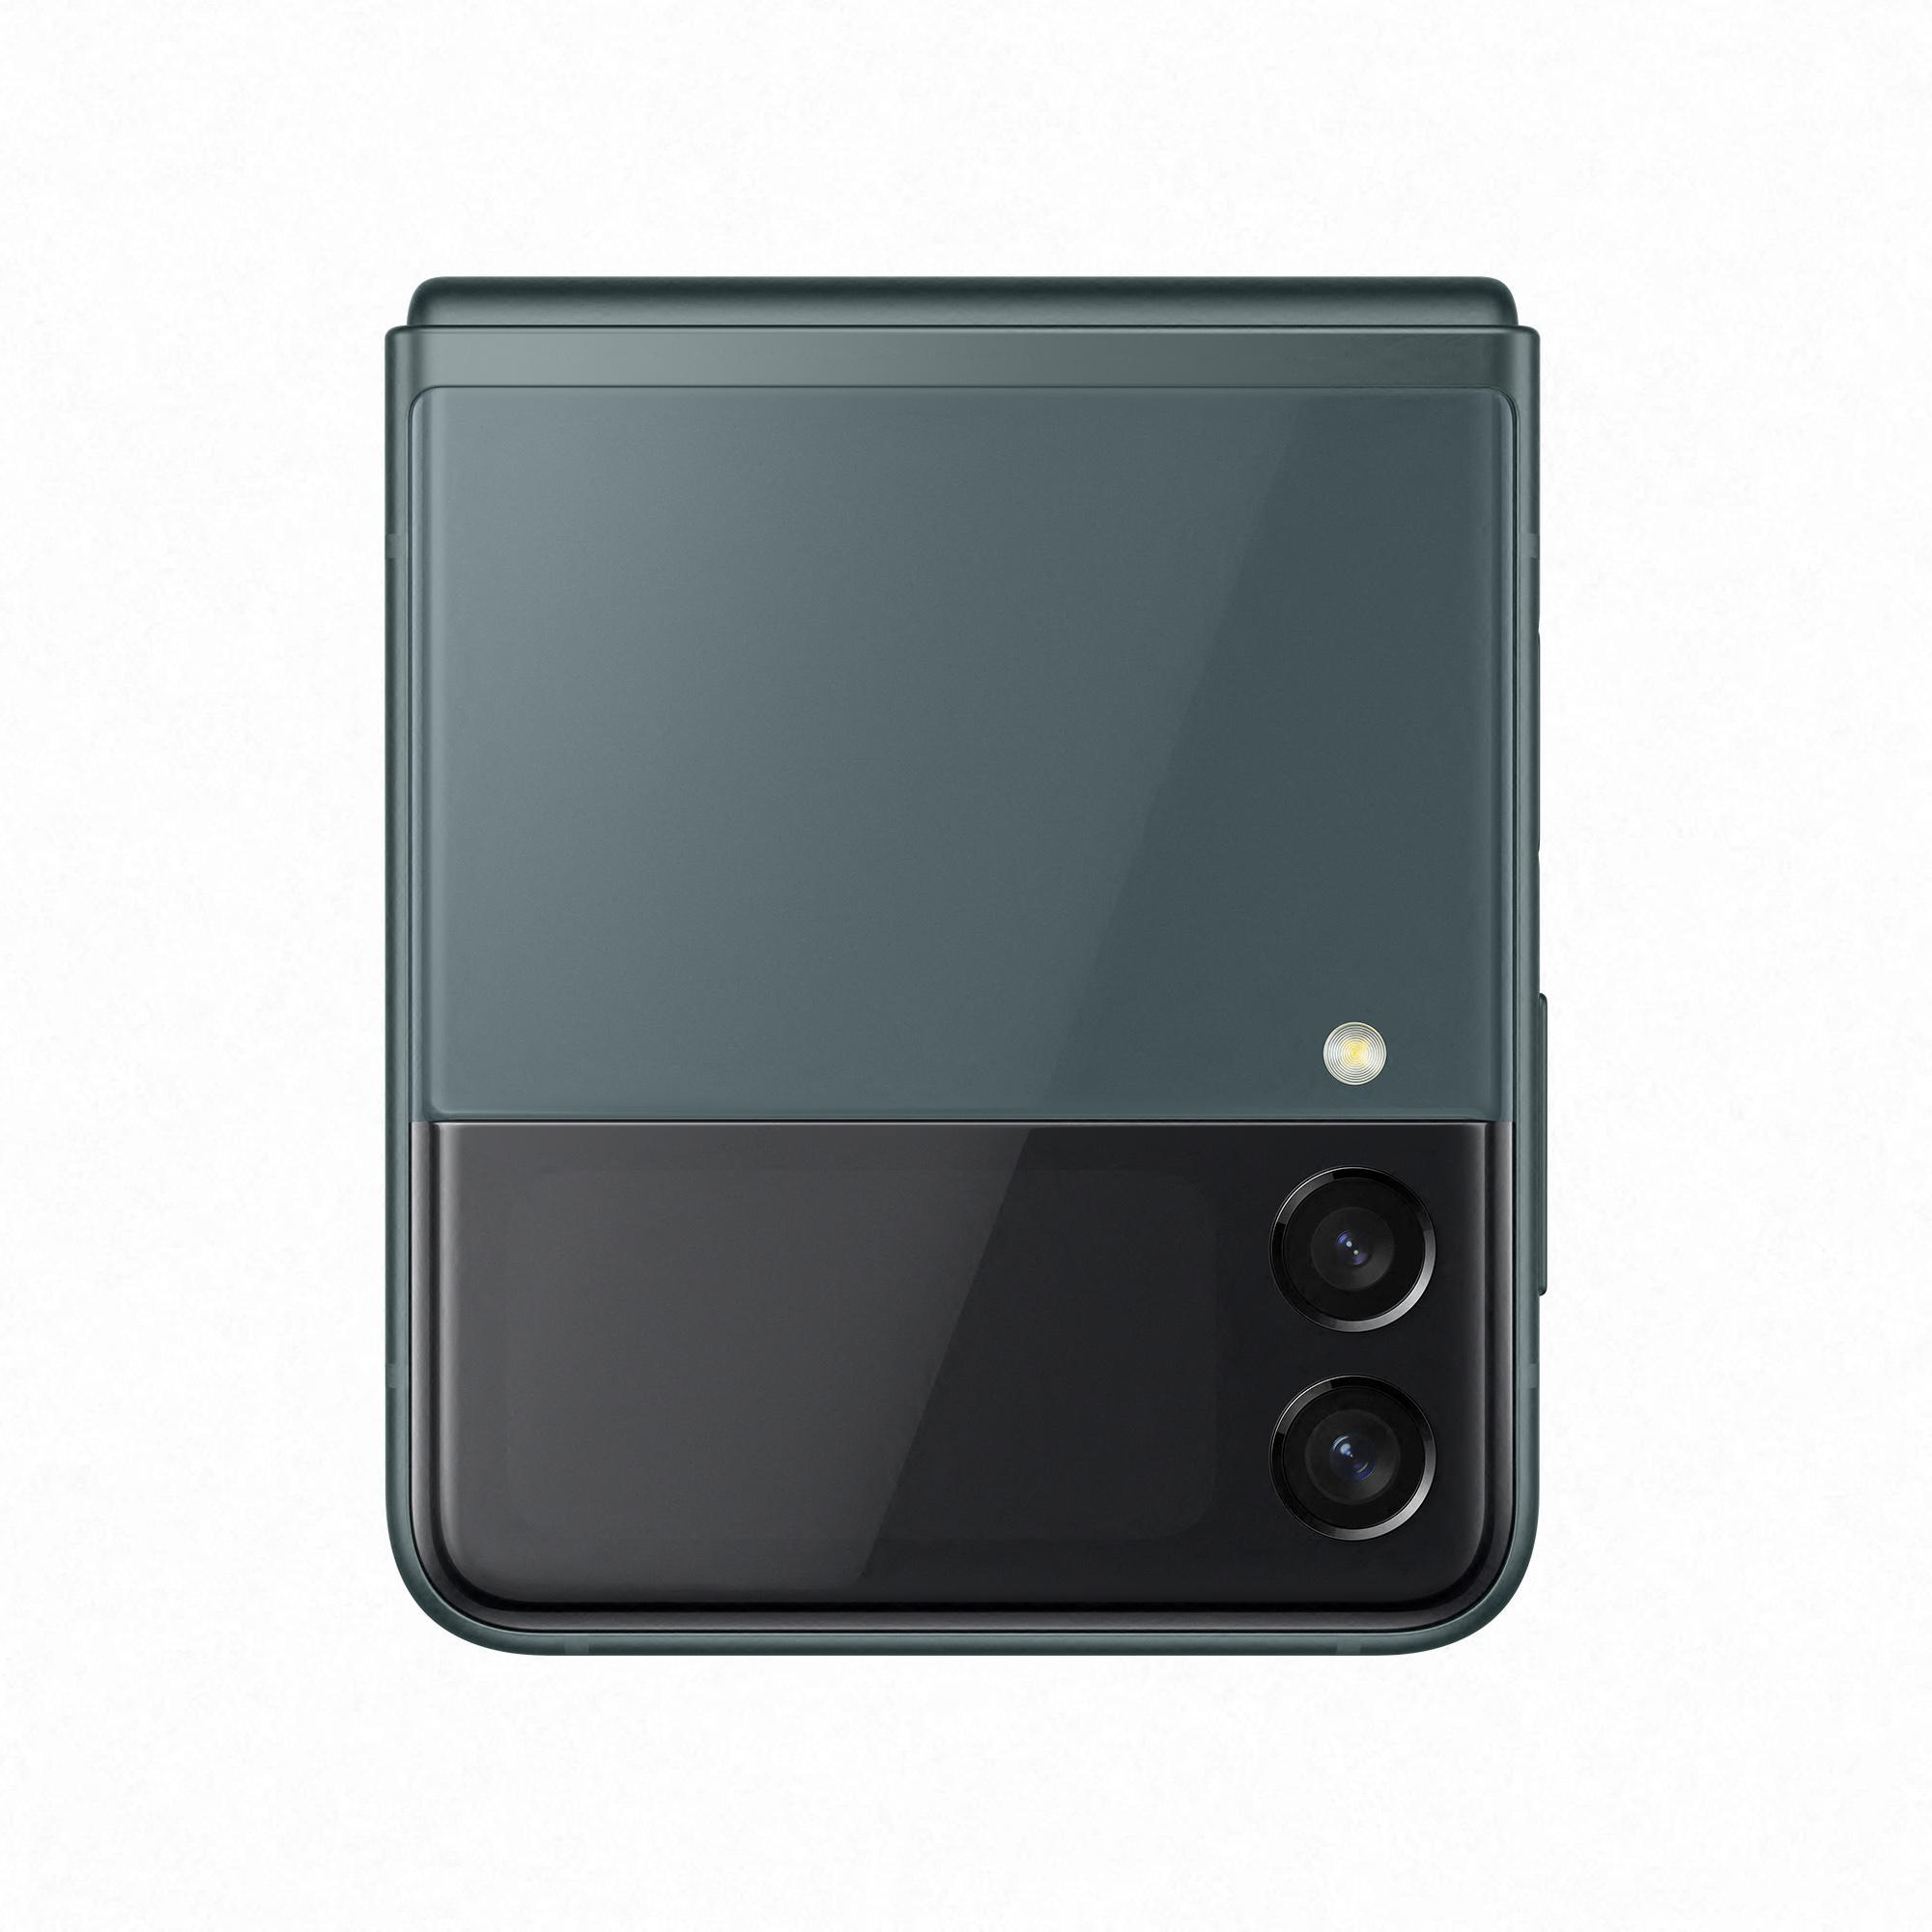 SAMSUNG Galaxy Z Phantom Flip3 GB Green Dual 256 5G SIM